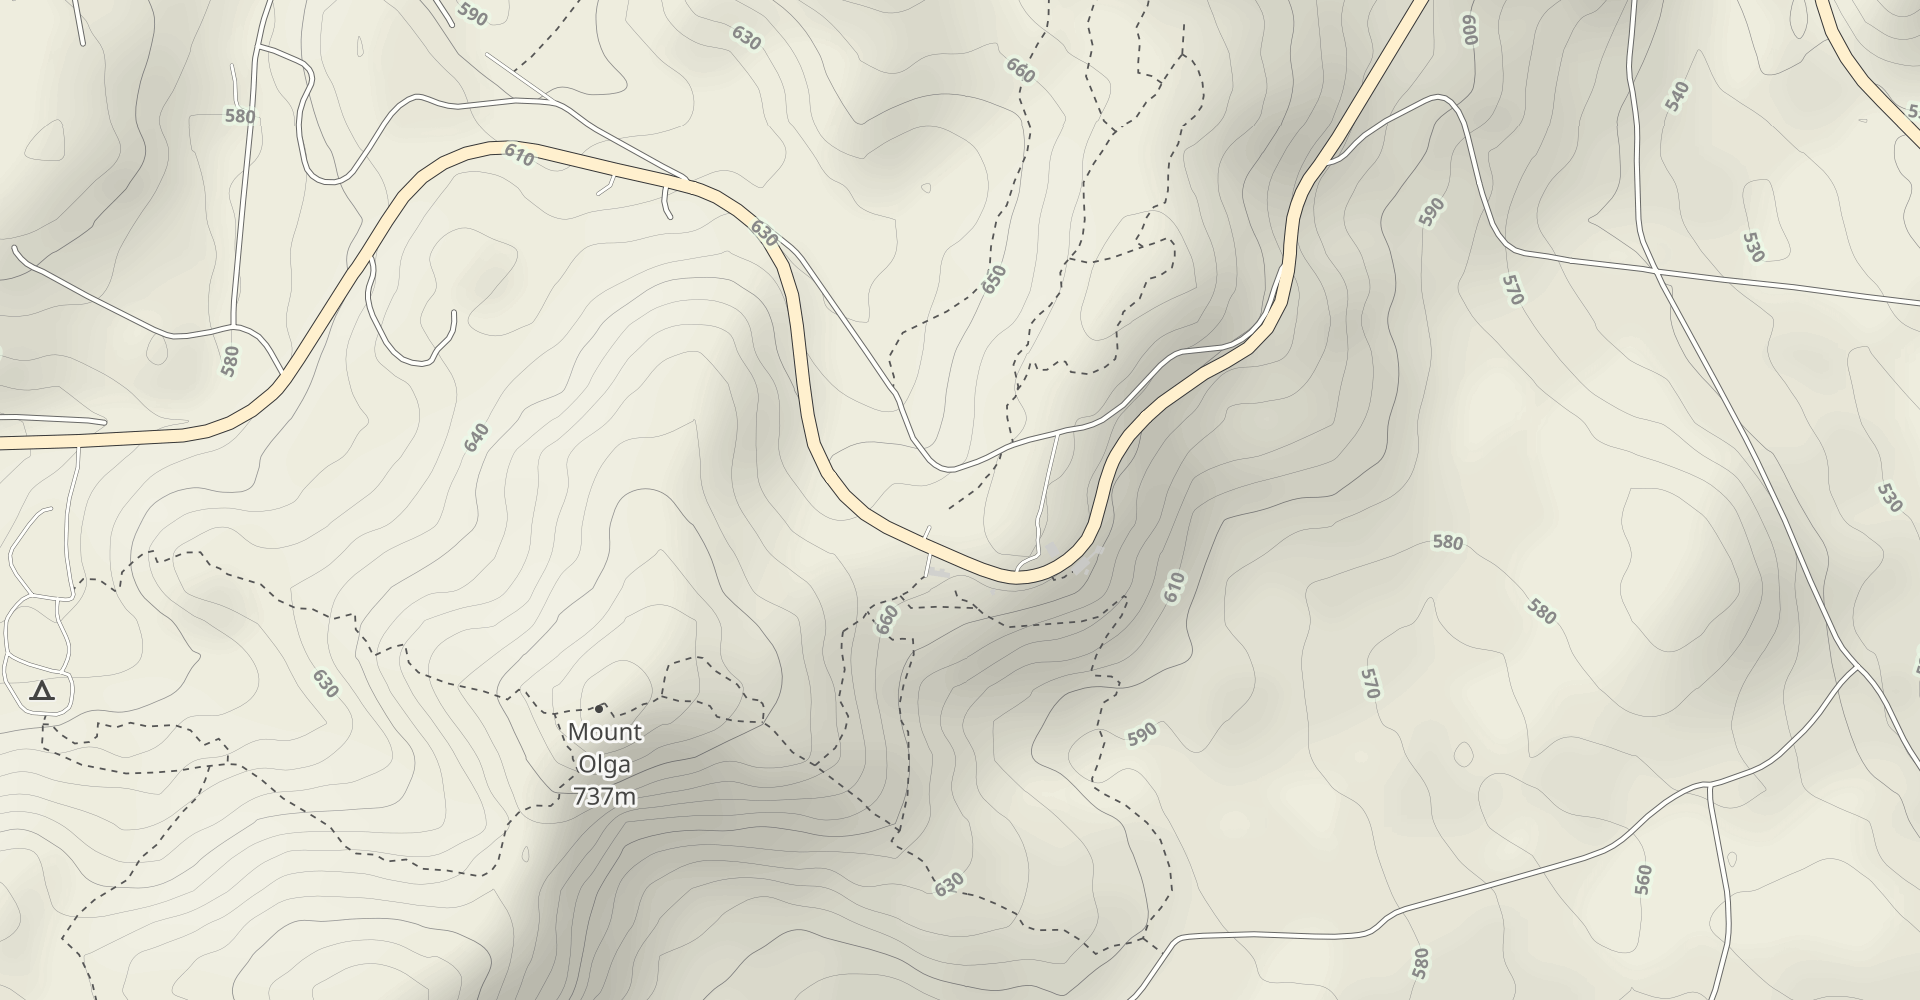 Mount Olga via Tower Trail